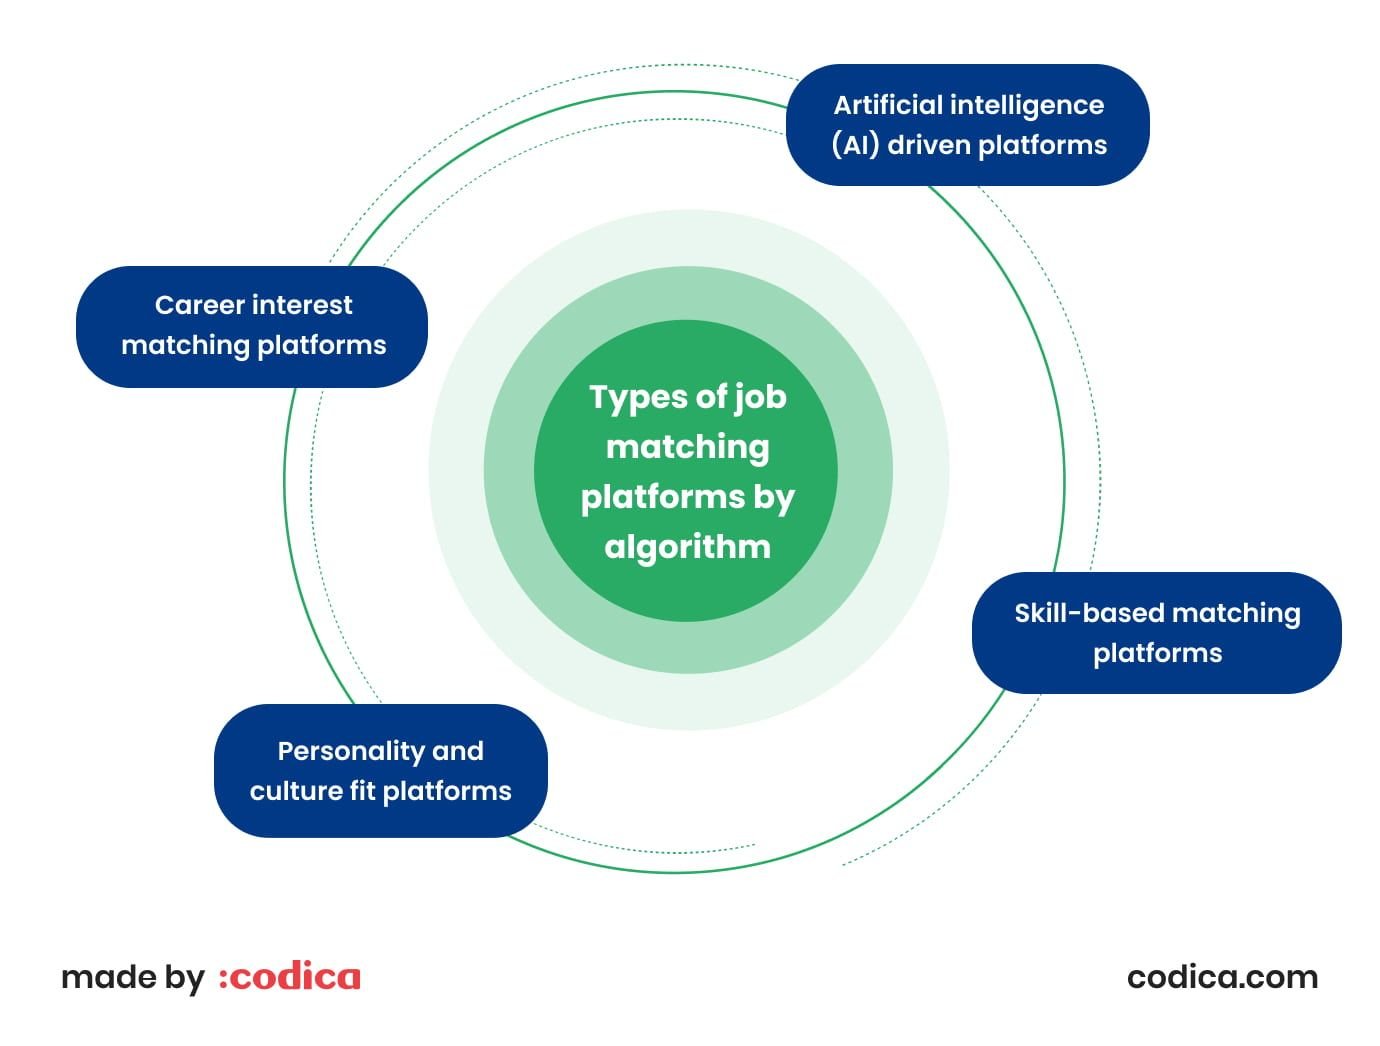 Job matching platforms by algorithm